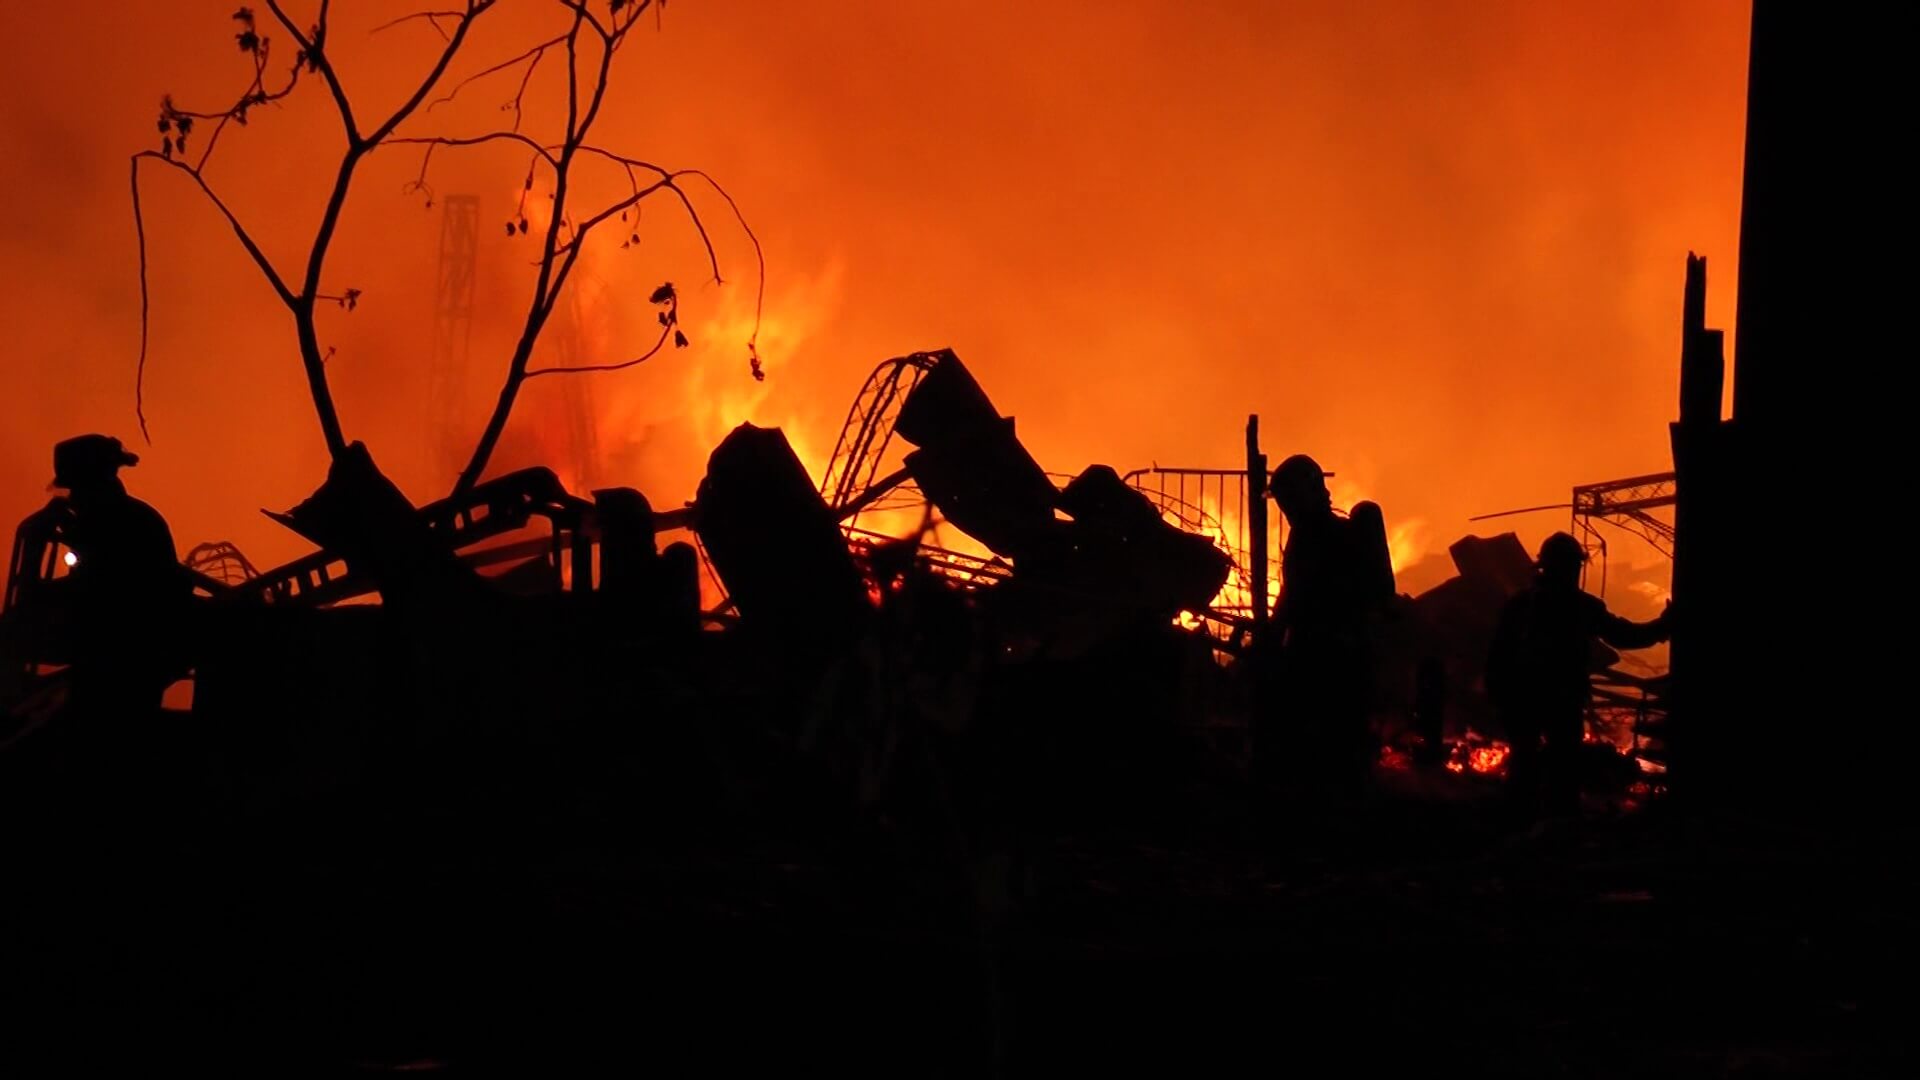 50 familias afectadas por pérdidas en incendio